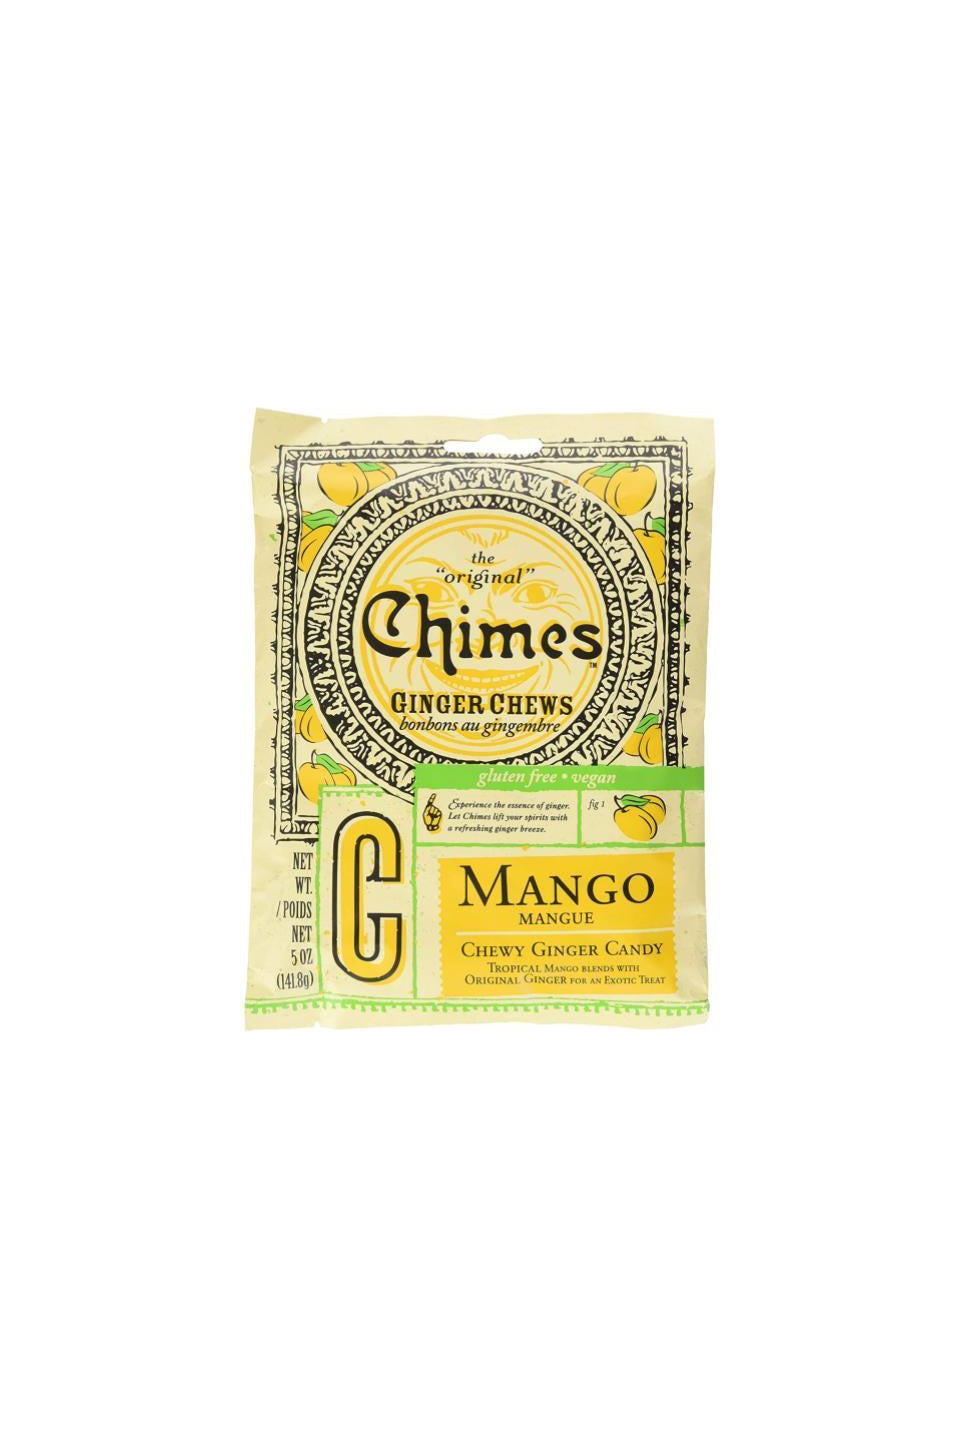 Chimes Mango Ginger Chews 141.8g